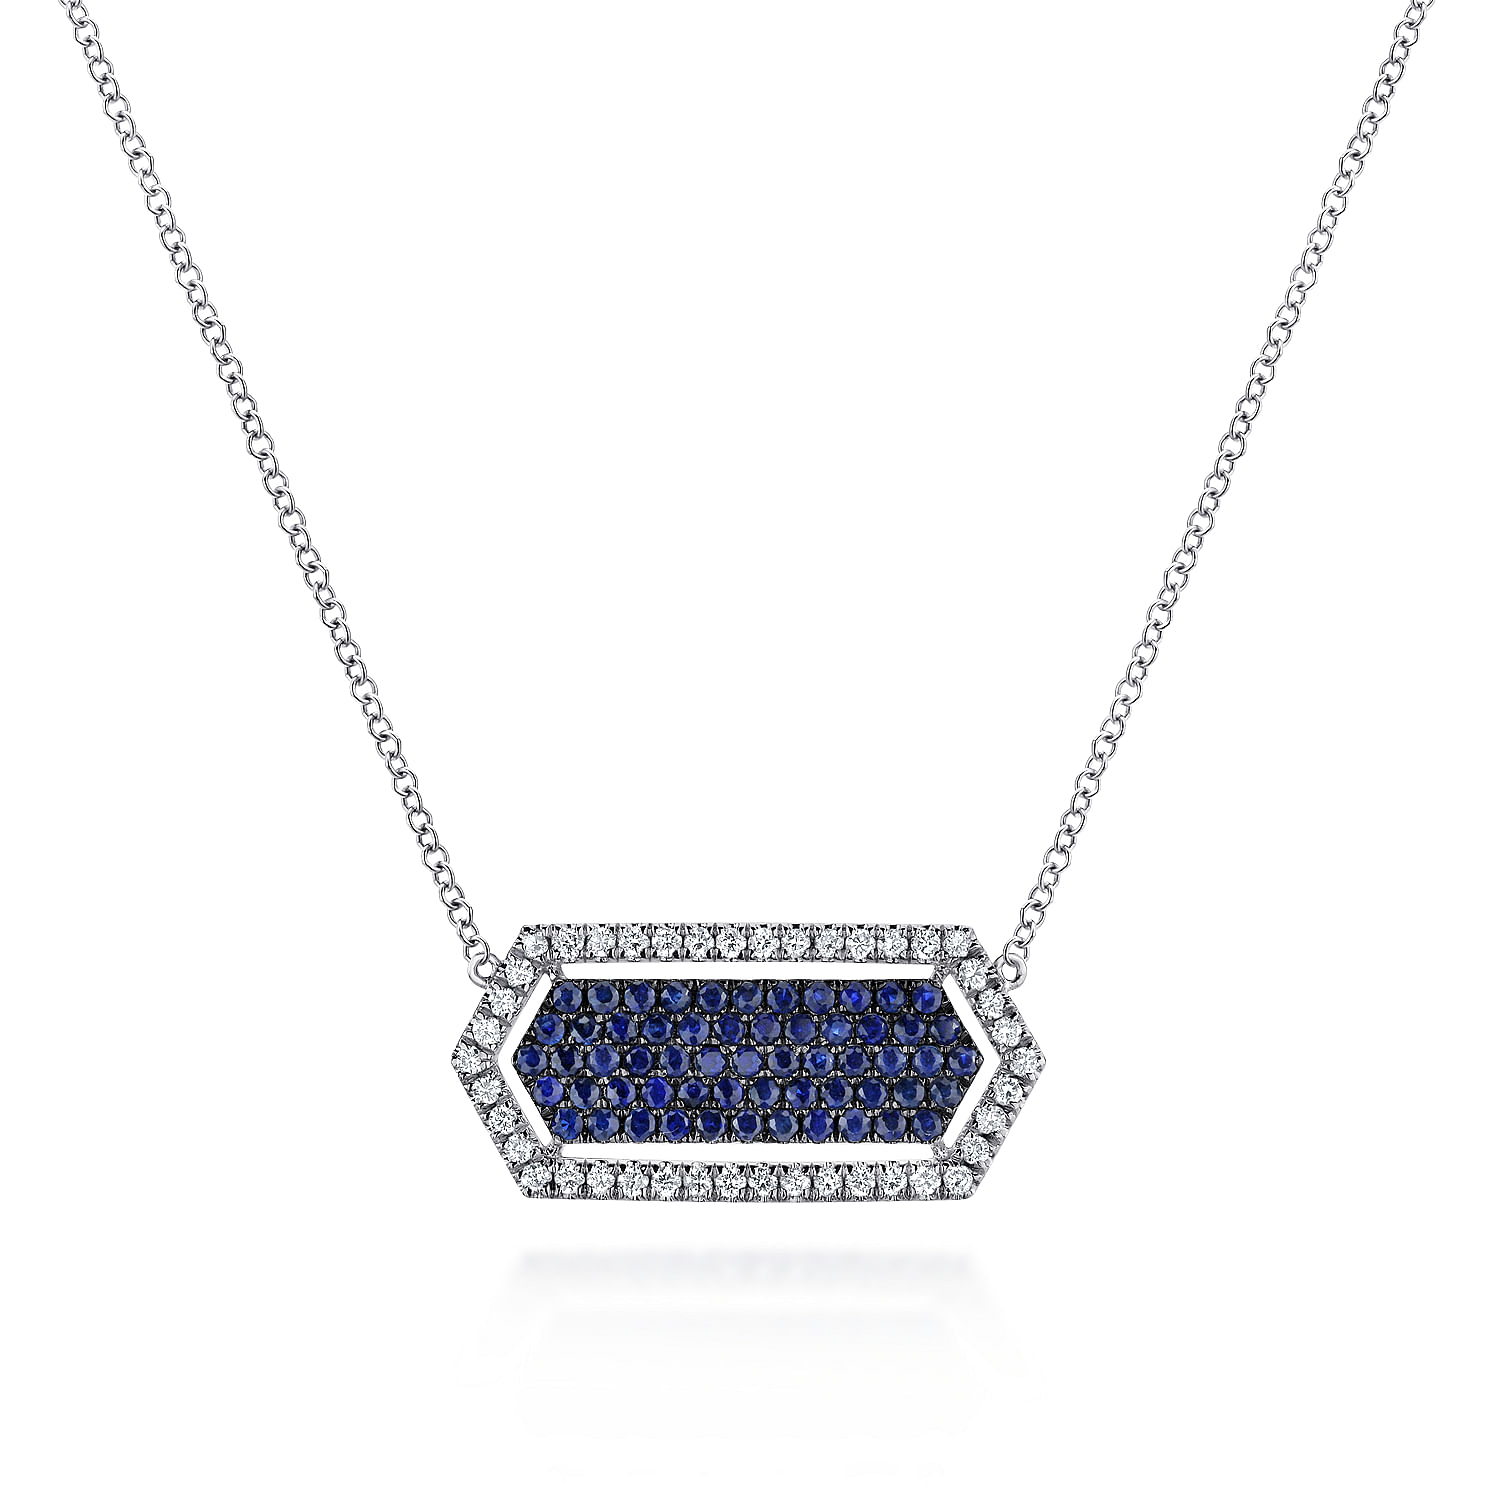 14K White Gold Elongated Hexagonal Diamond and Sapphire Pendant Necklace